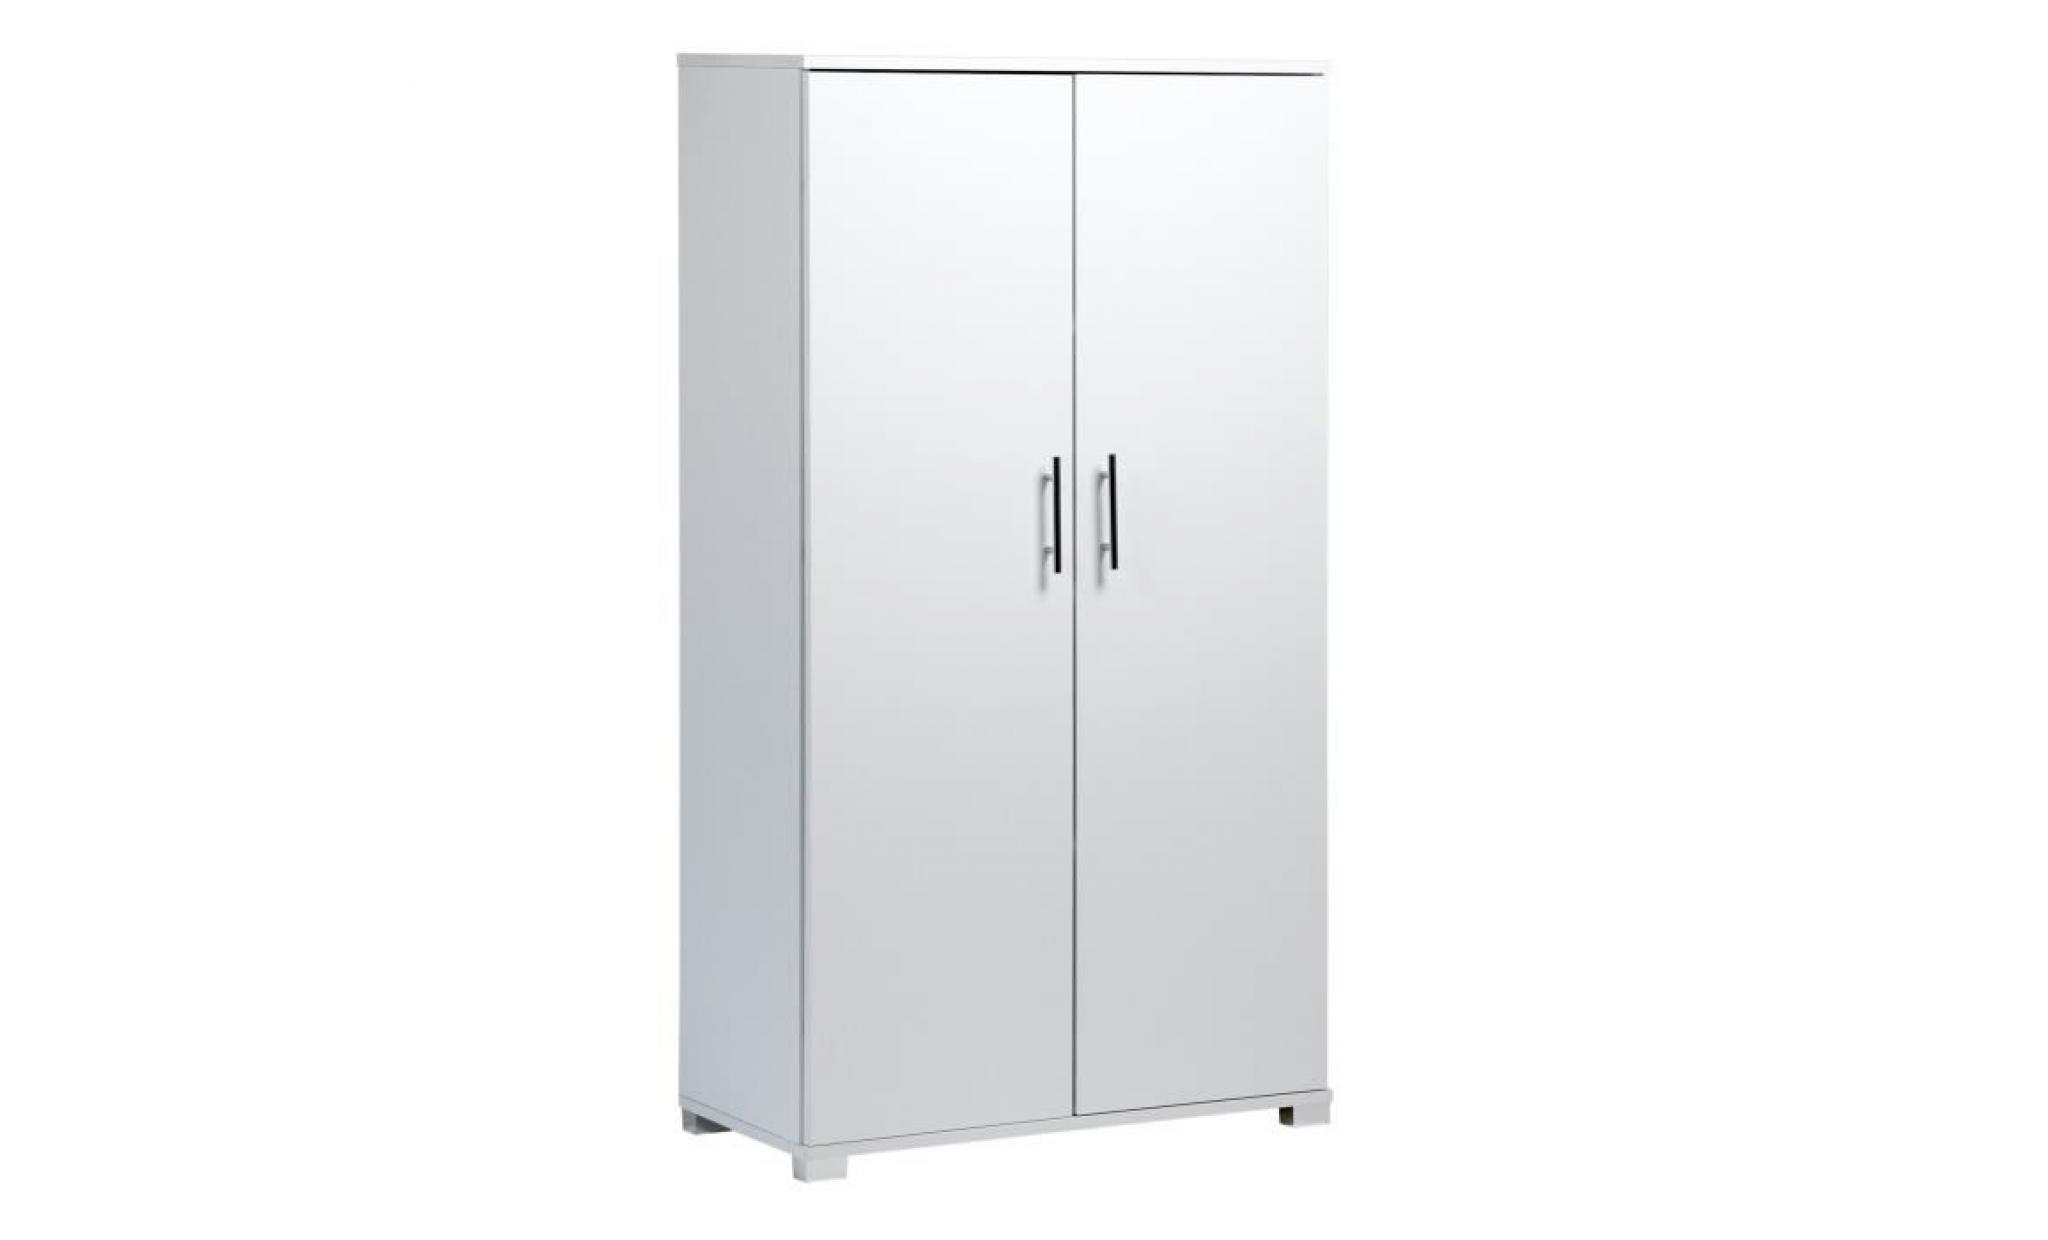 mmt white office storage 2 door bookcase filing cabinet , 140cm tall , 3 internal shelves